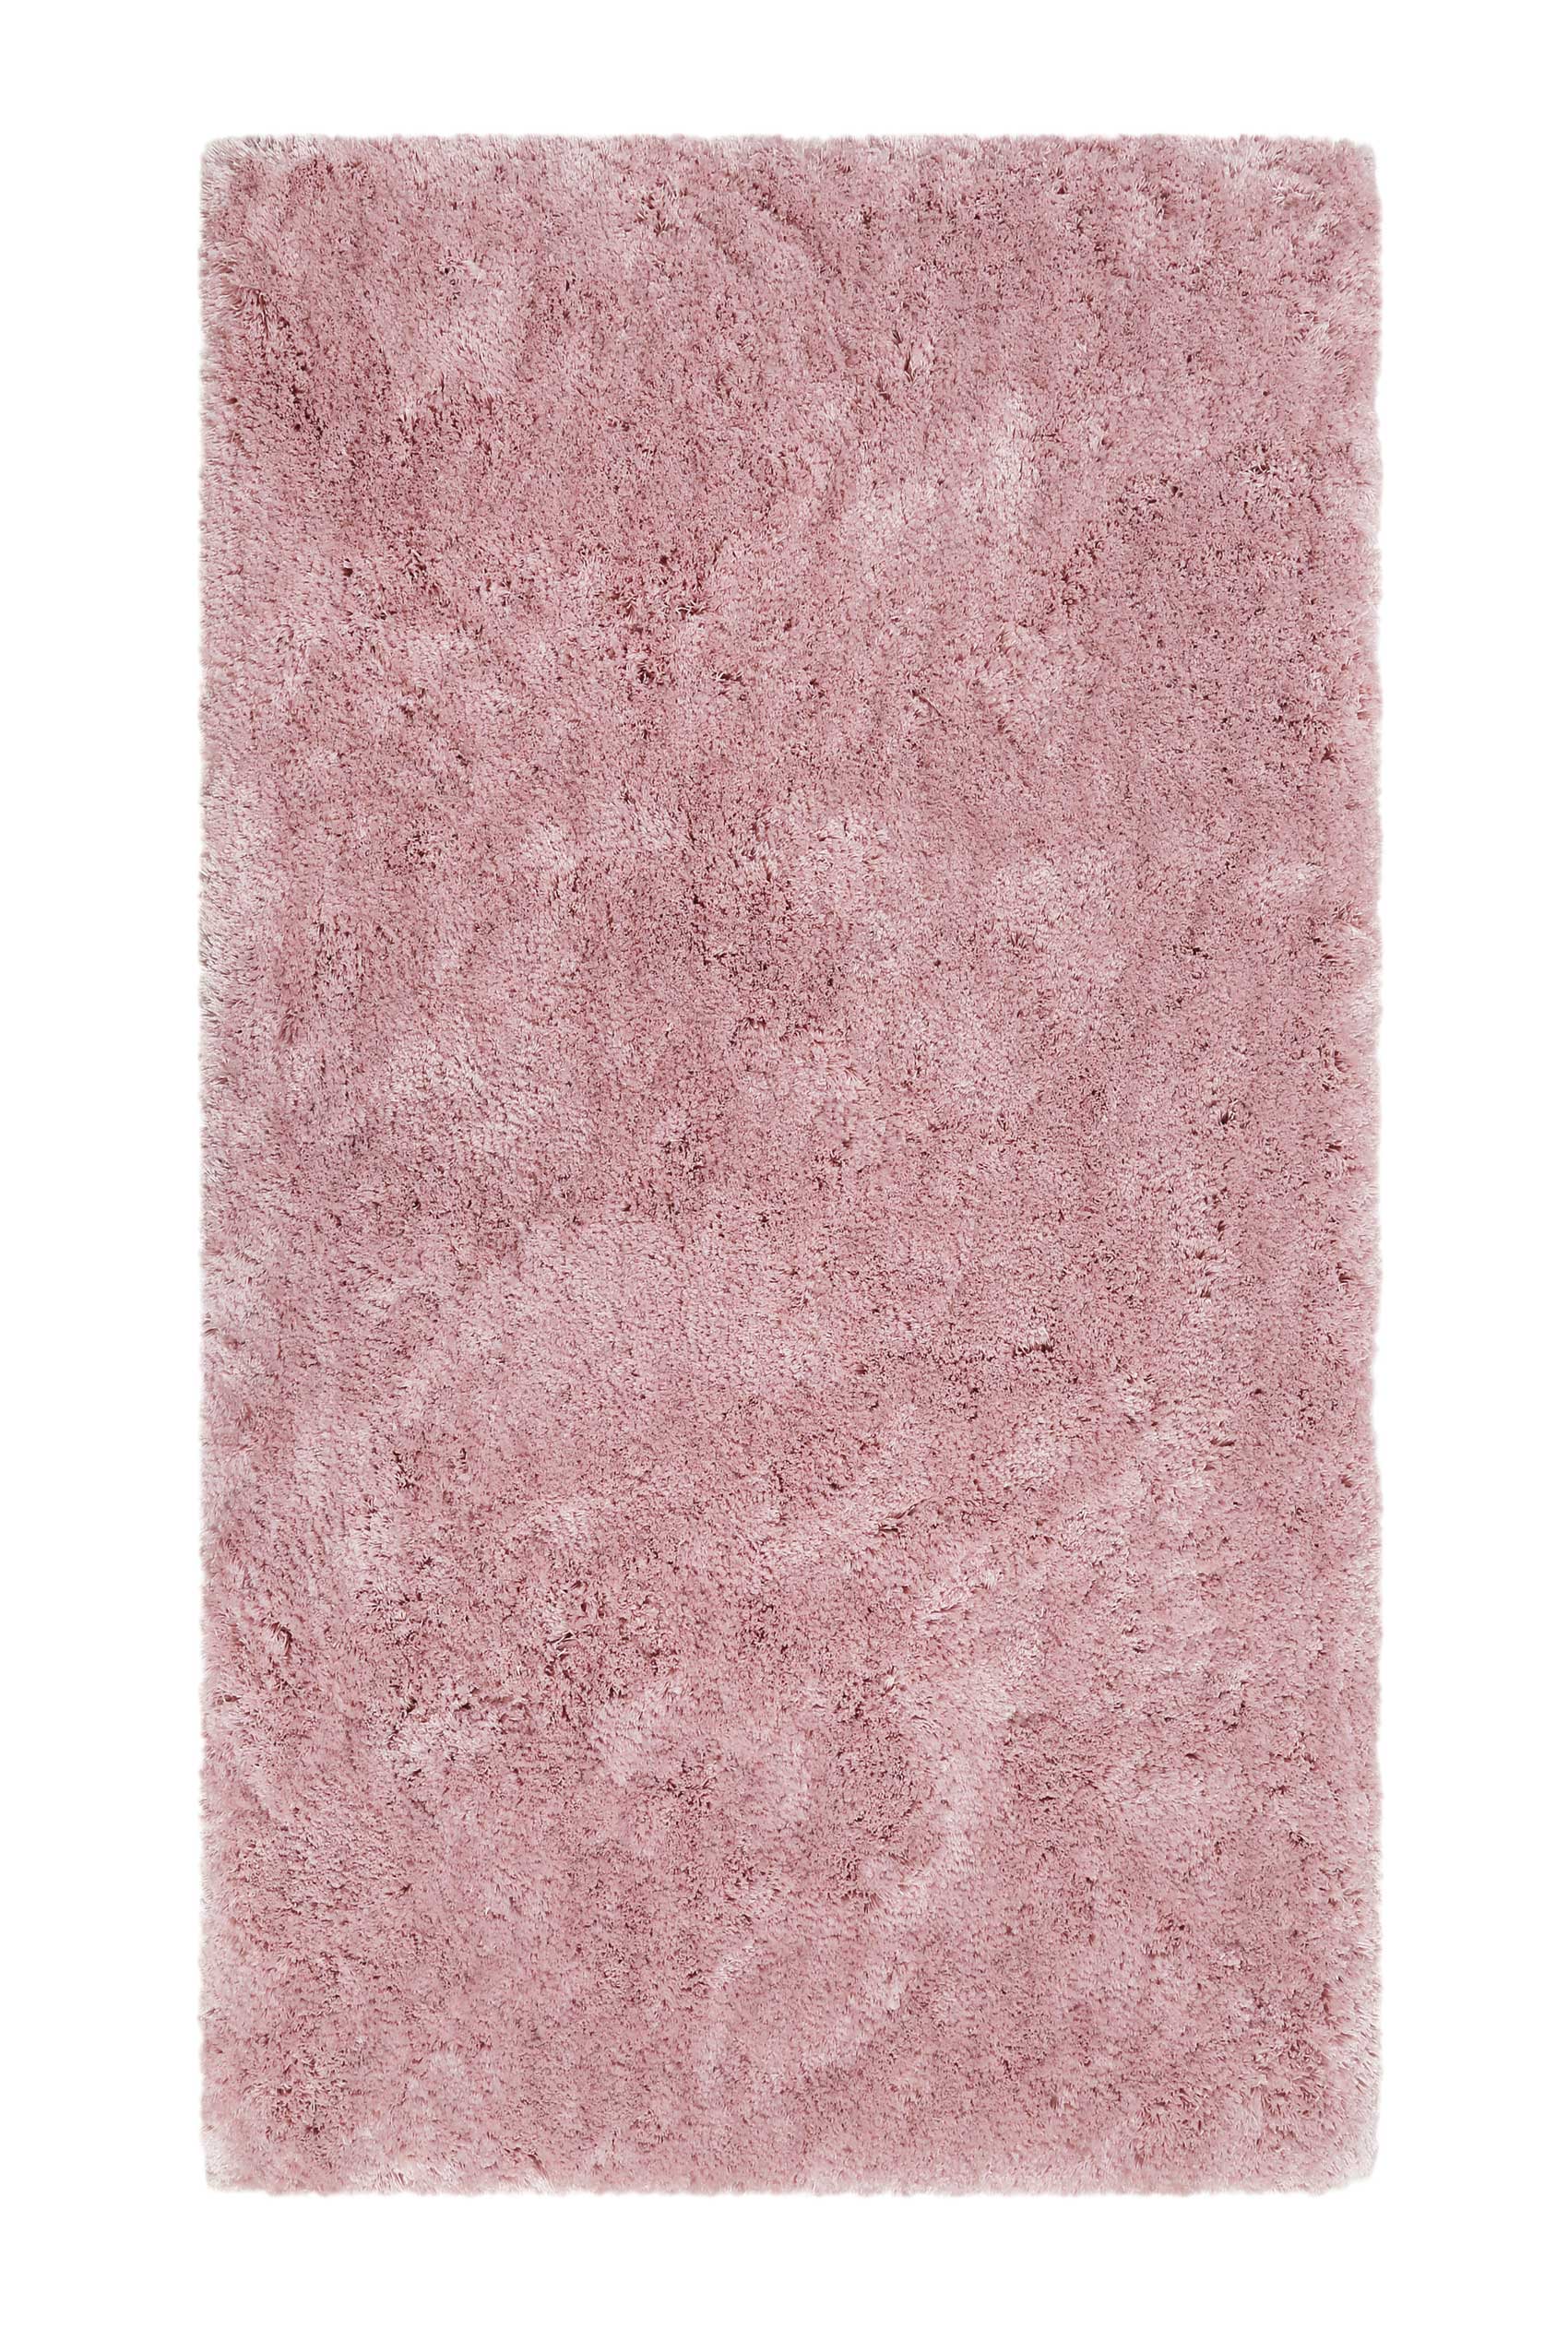 tapis de bain microfibre antidérapant rose 55x65